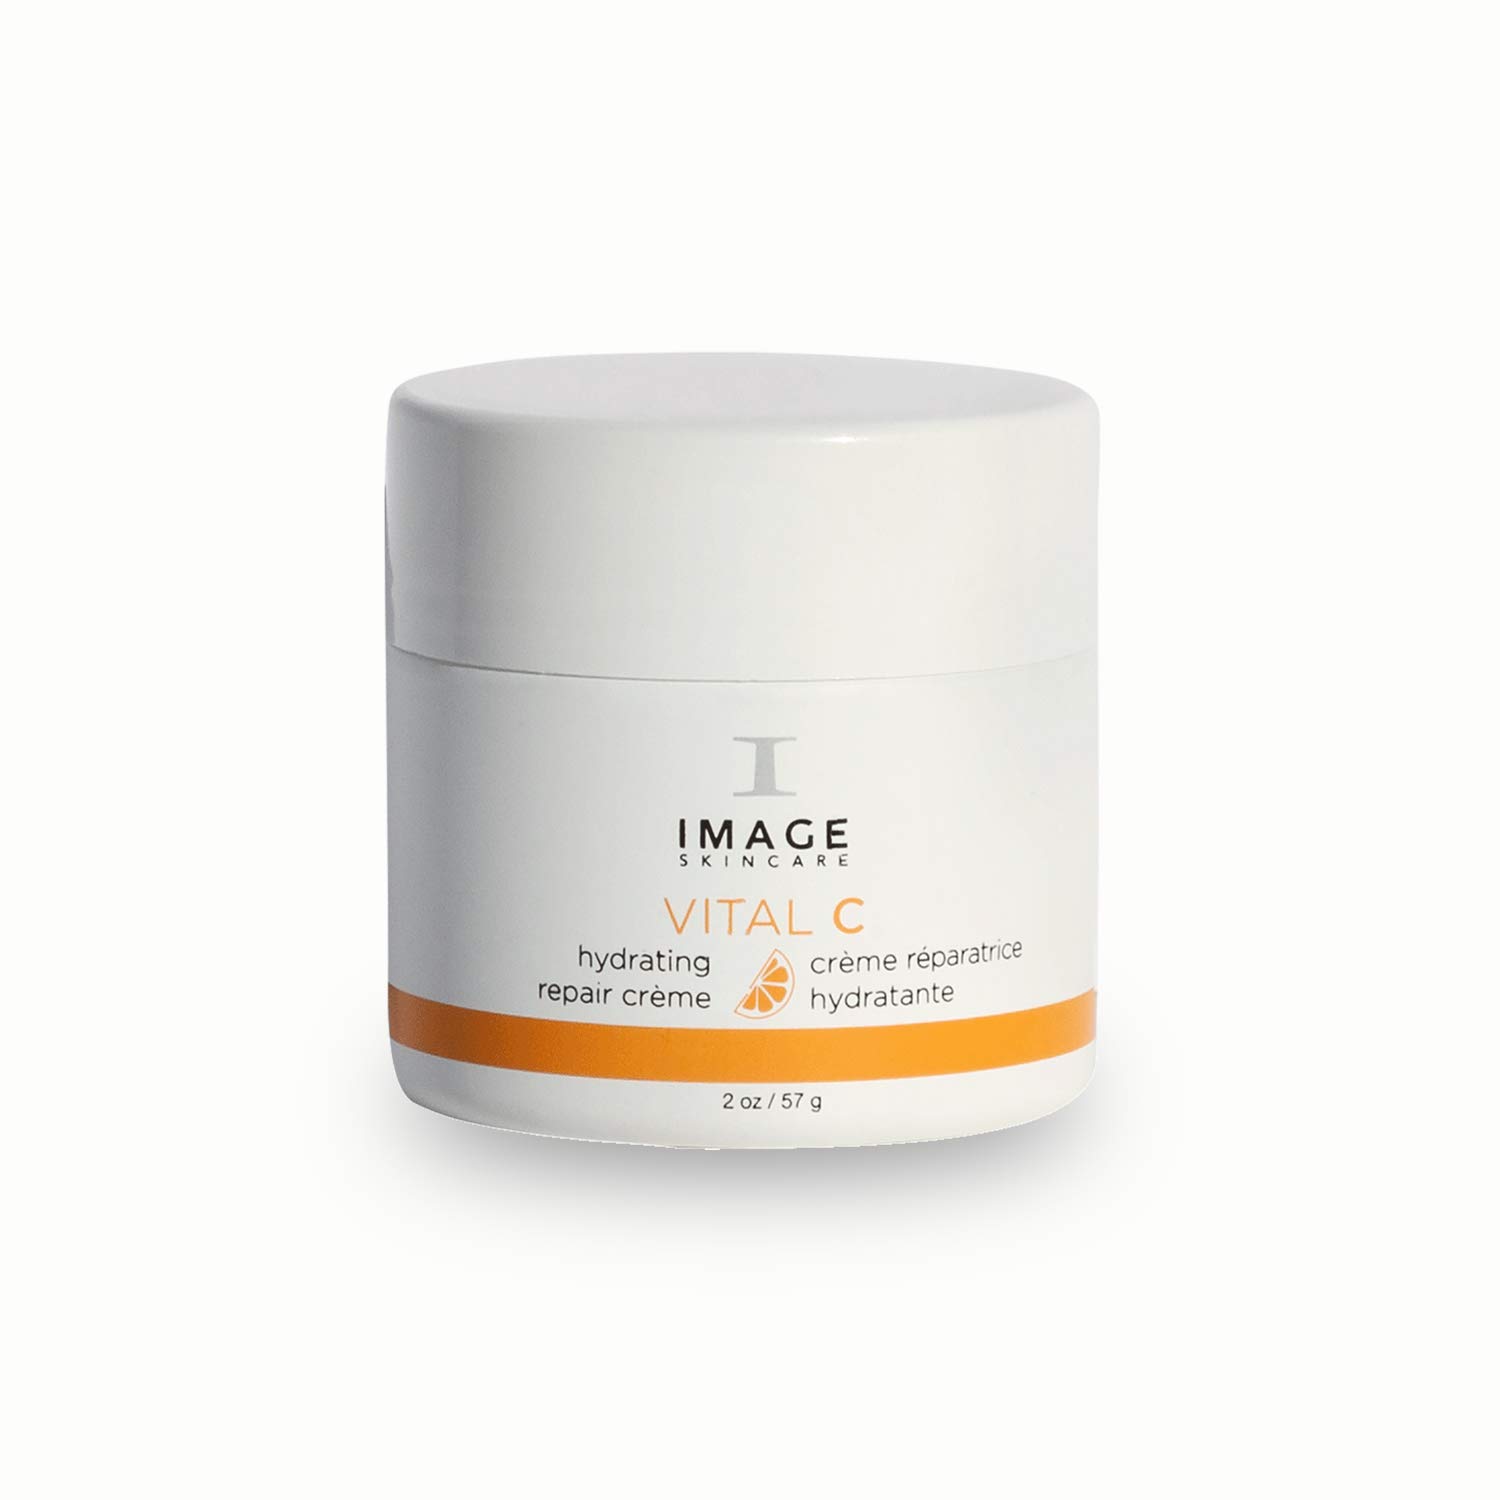 Image Skincare Vital C Hydrating Repair Cream - 2 oz-0